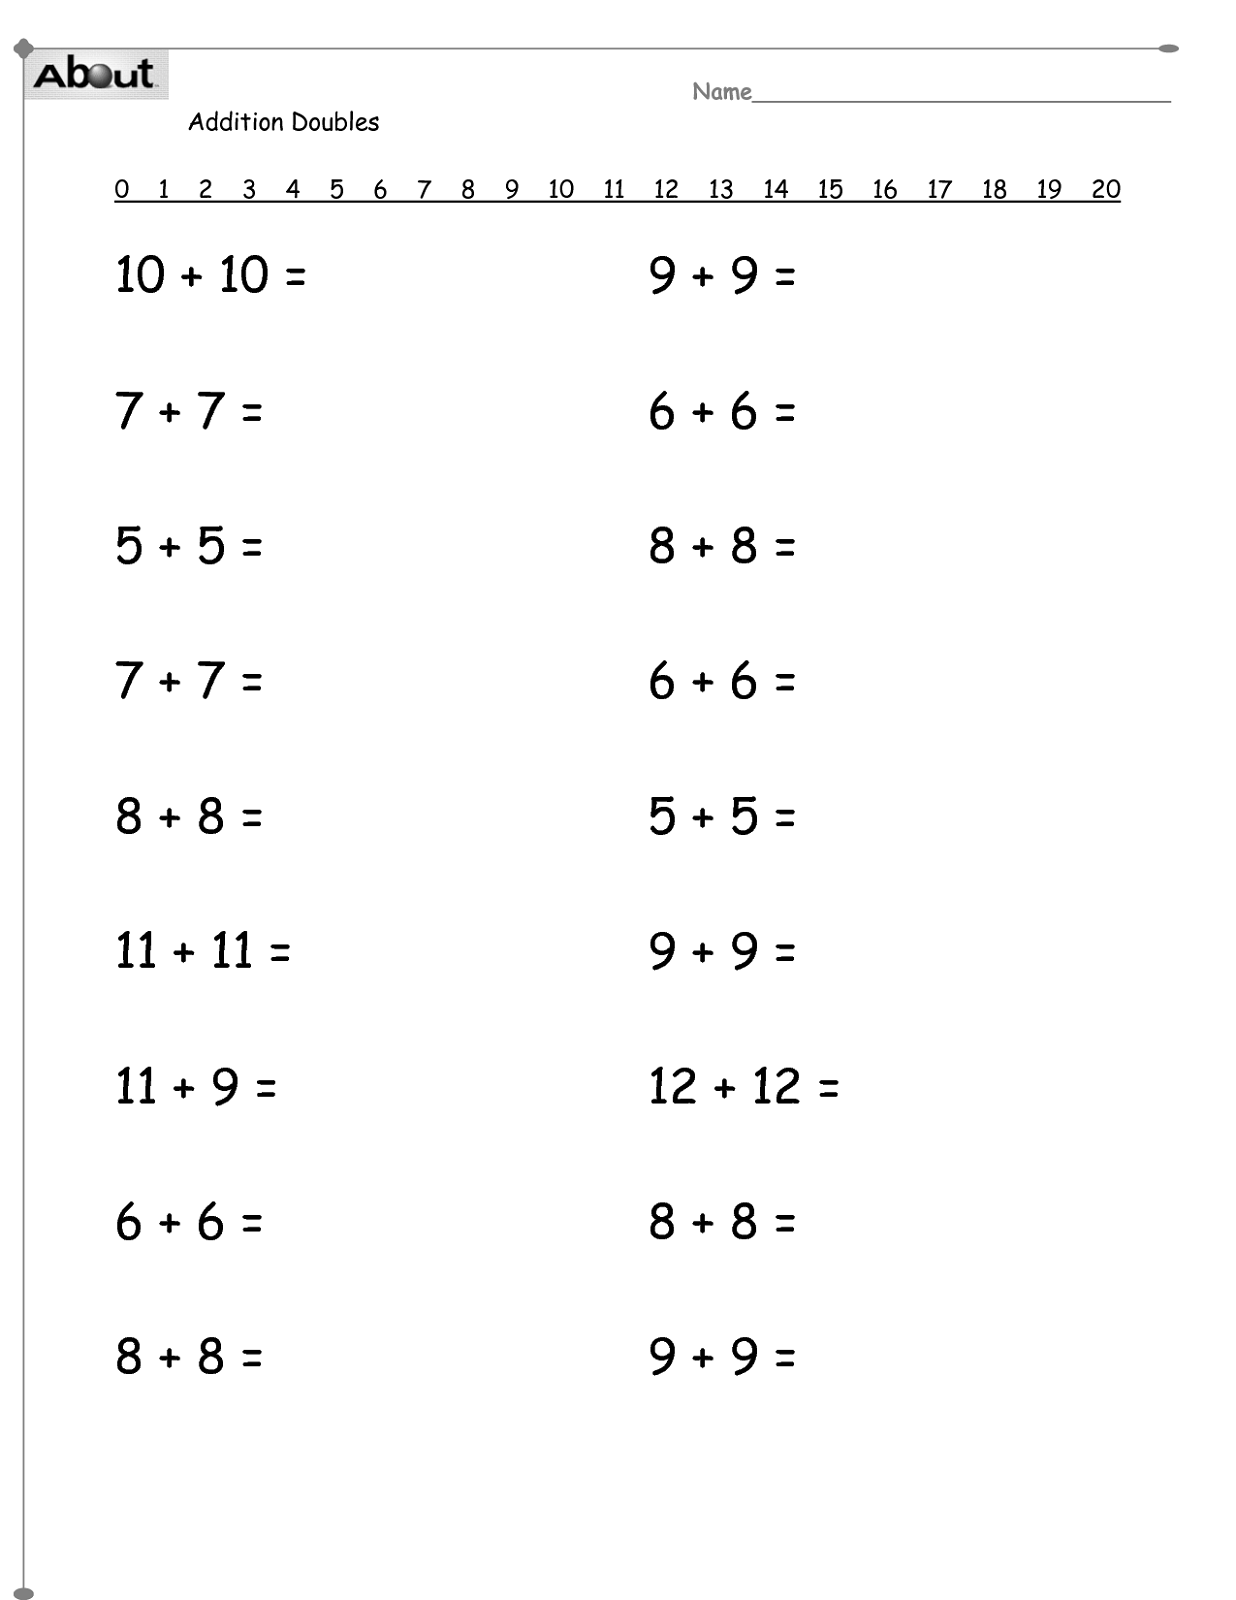 maths worksheets for grade 1 download math worksheets for grade 1 activity shelter download maths worksheets 1 for grade 